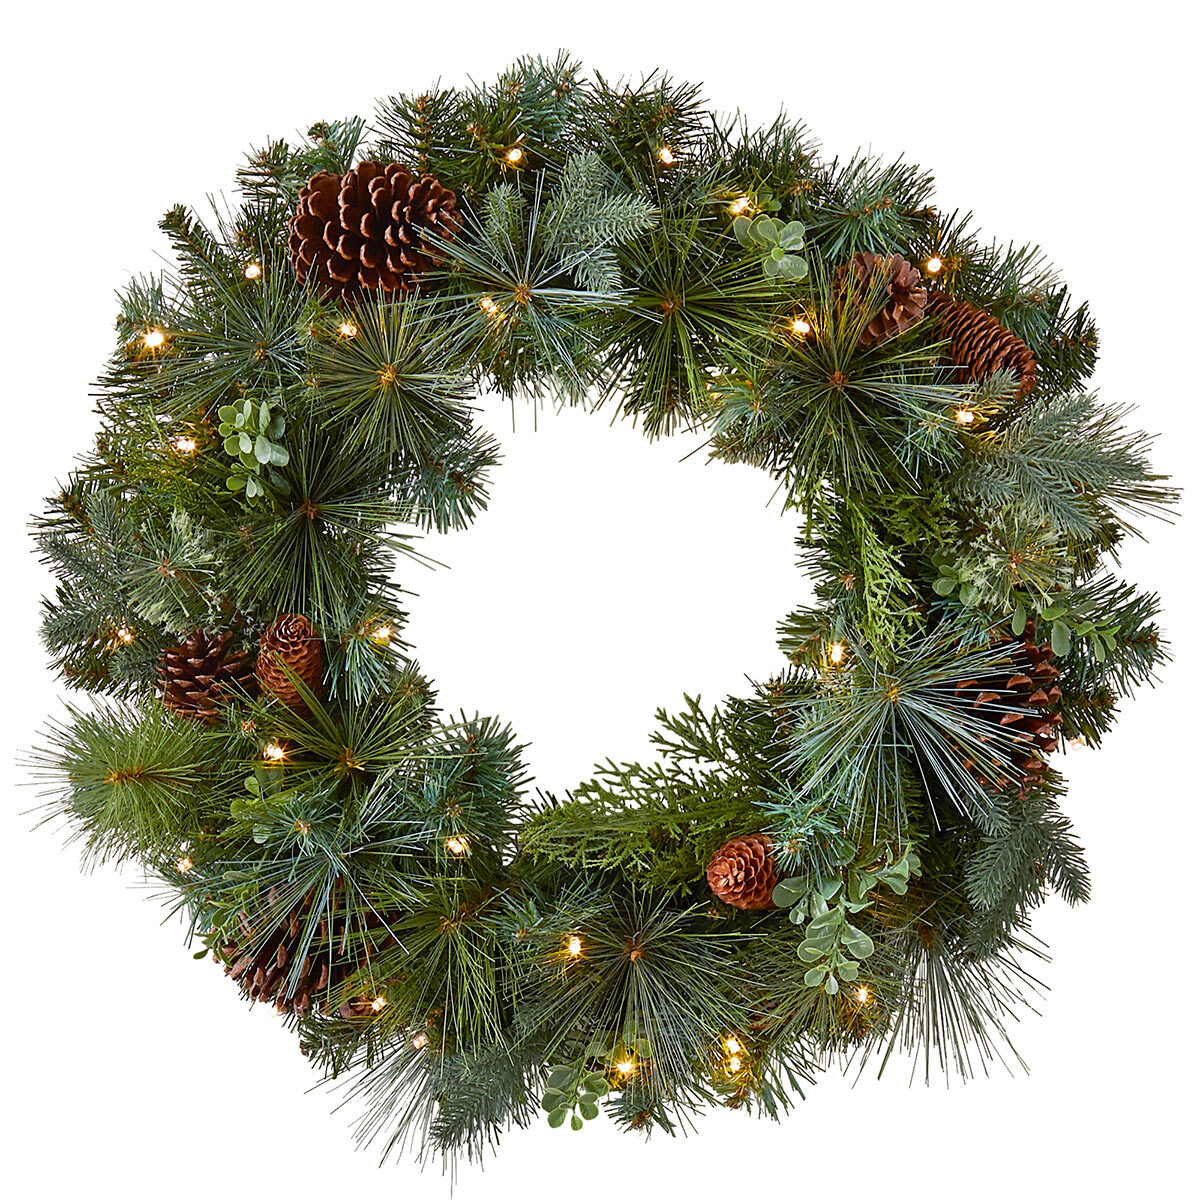 Buy 24" Greenery Wreath Close-up2 Image at Costco.co.uk